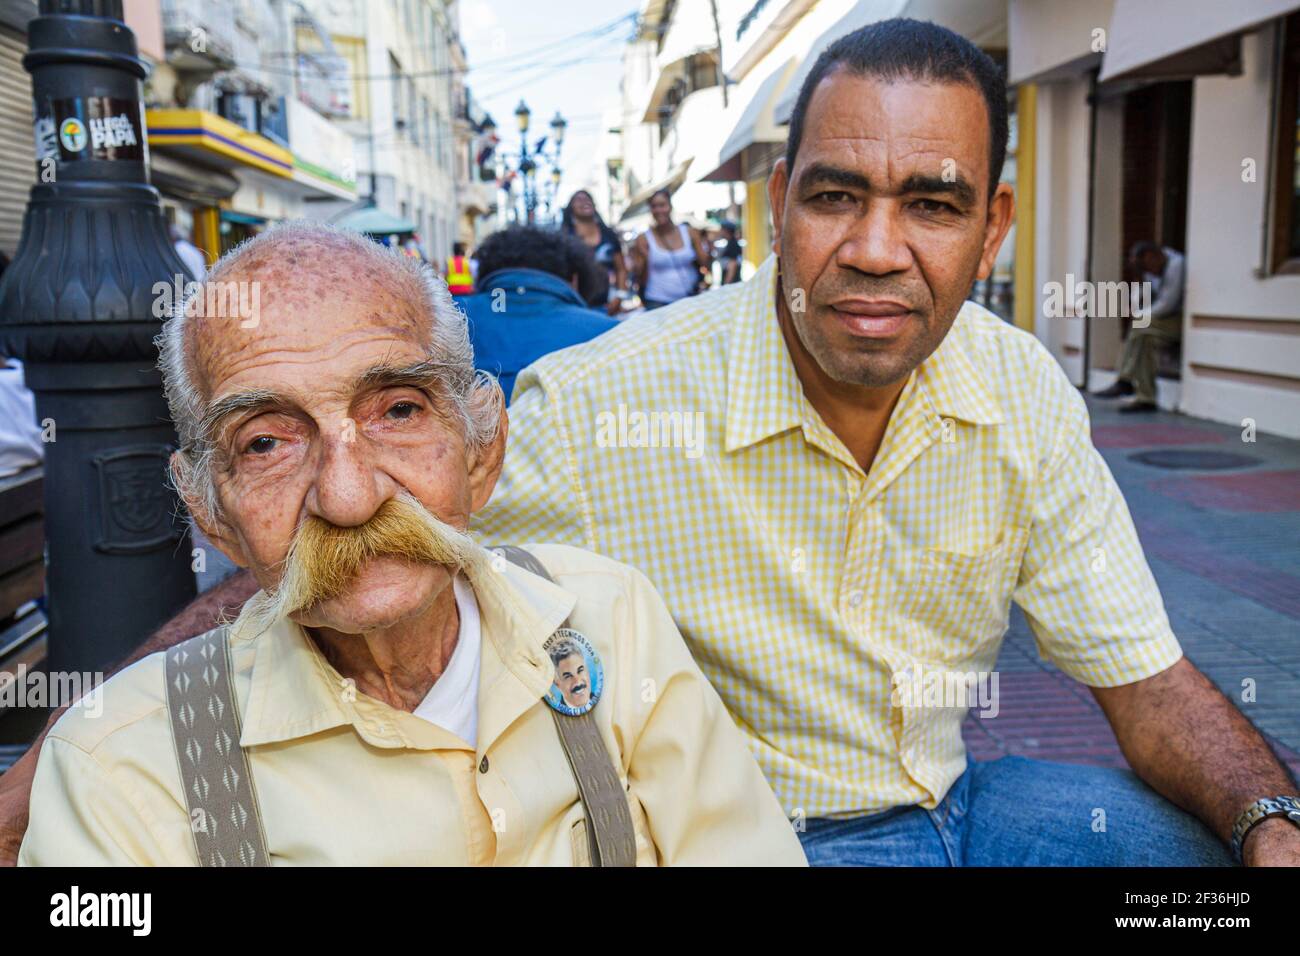 Santo Domingo Repubblica Dominicana, Ciudad Colonial Calle el Conde Peatonal, uomo ispanico nero uomini baffi senior indossando sospenditori, Foto Stock